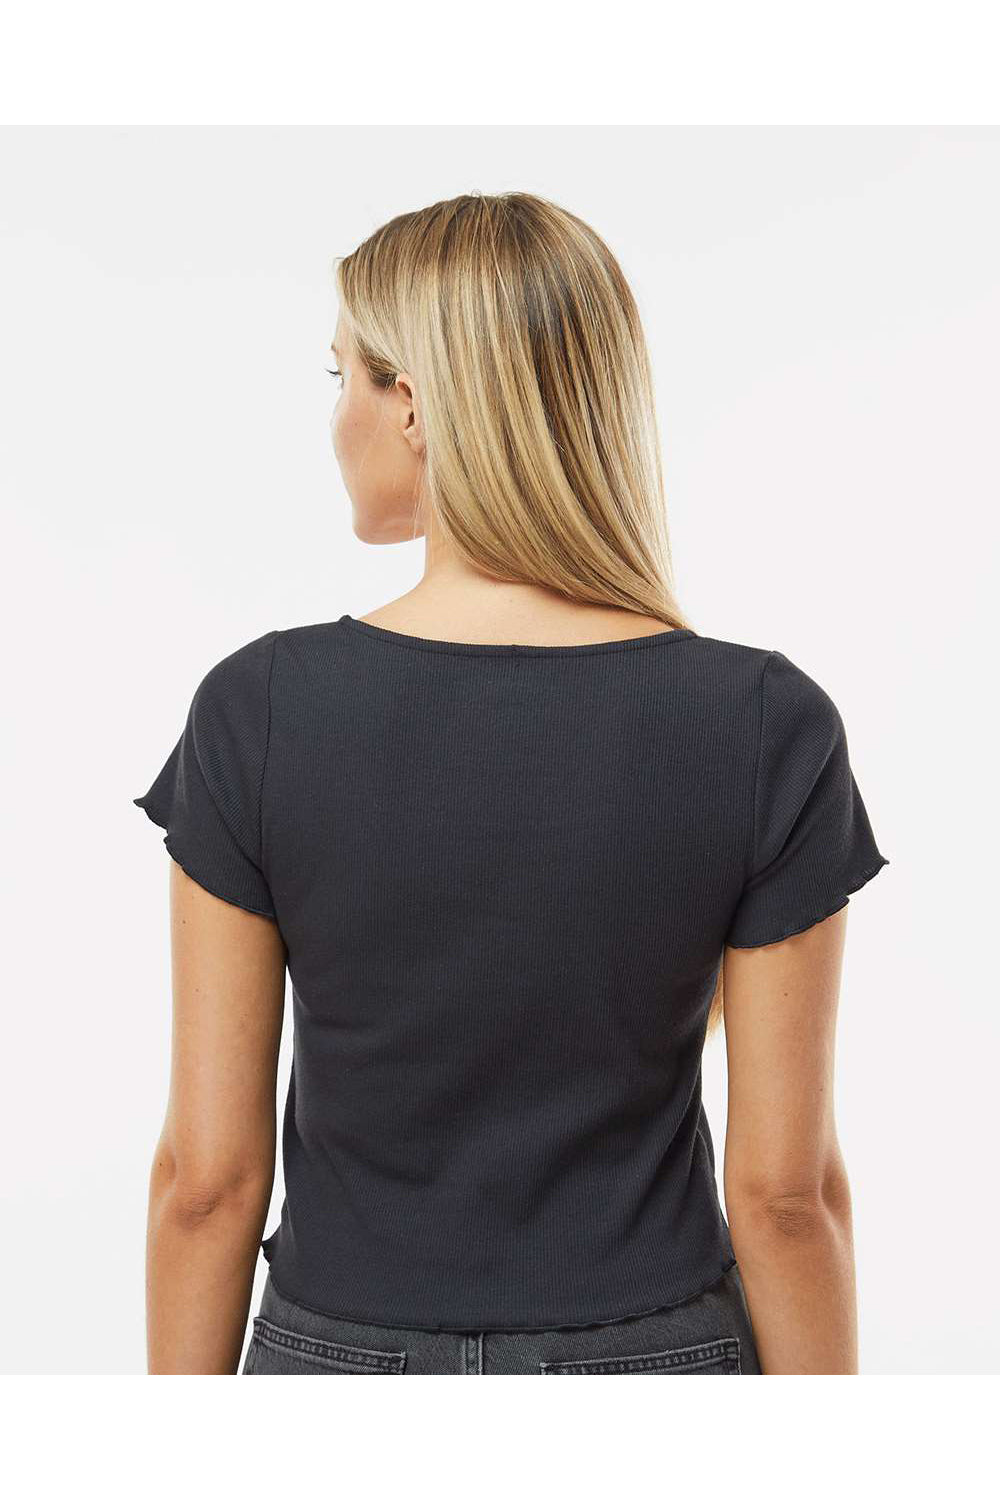 Boxercraft BW2403 Womens Baby Rib Short Sleeve Scoop Neck T-Shirt Black Model Back